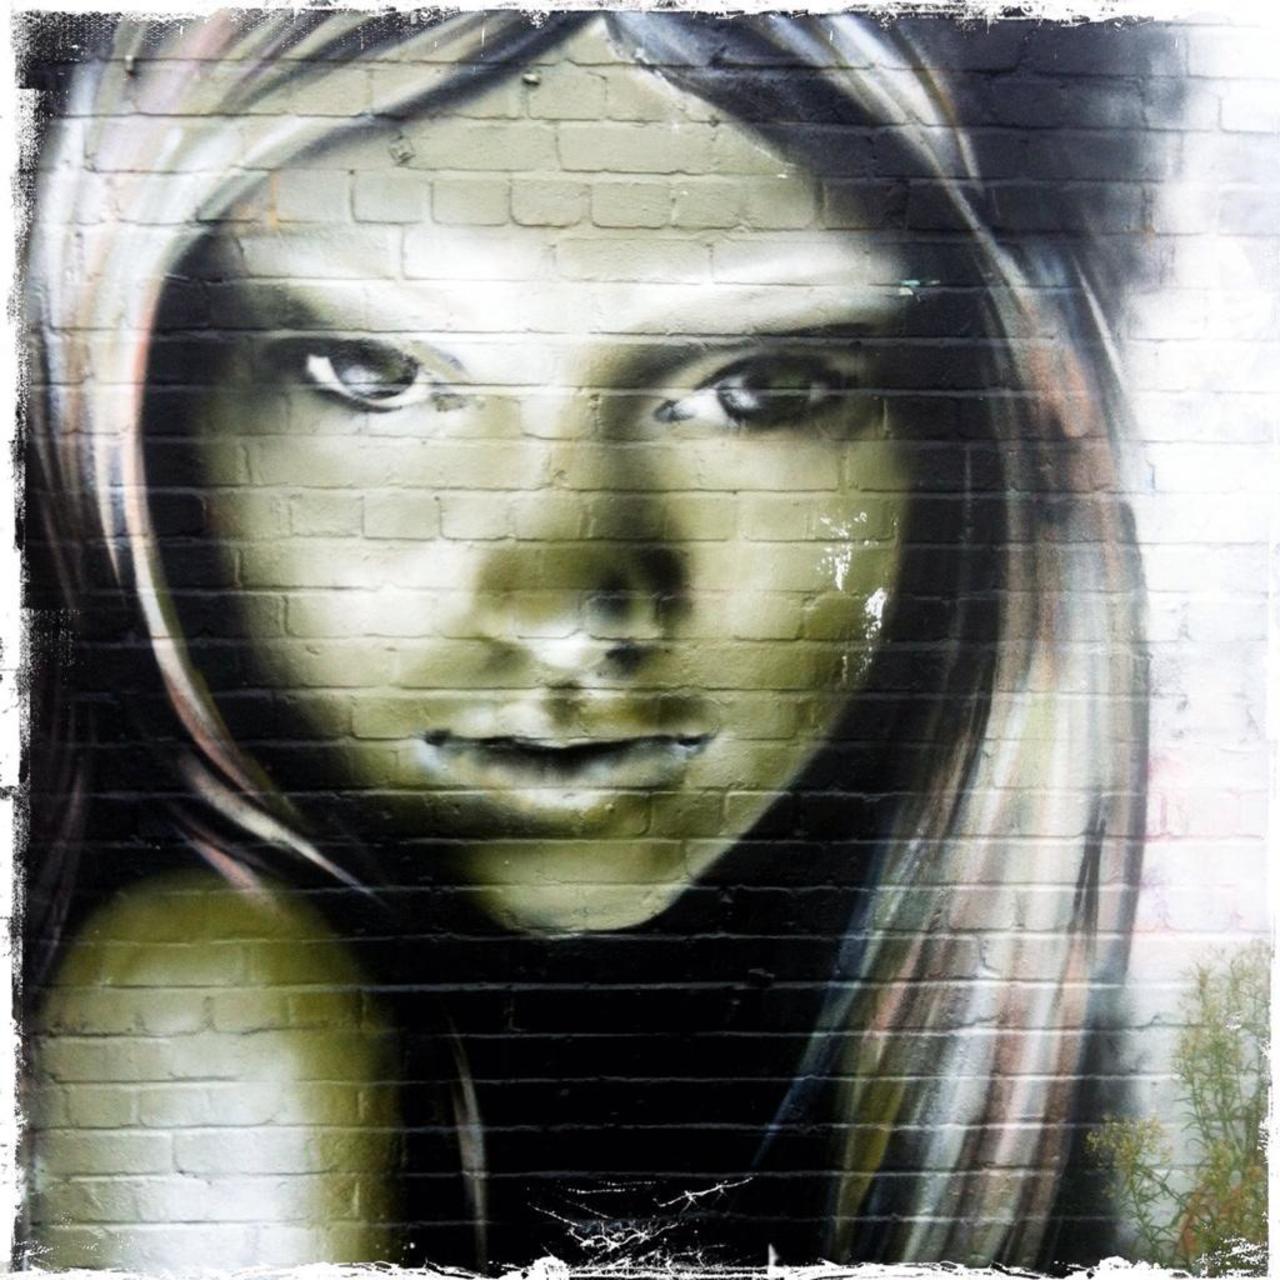 "@BrickLaneArt: Beautiful mural found at the Hollywell Lane car park #art #streetart #graffiti http://t.co/6mDLZXgrW8"